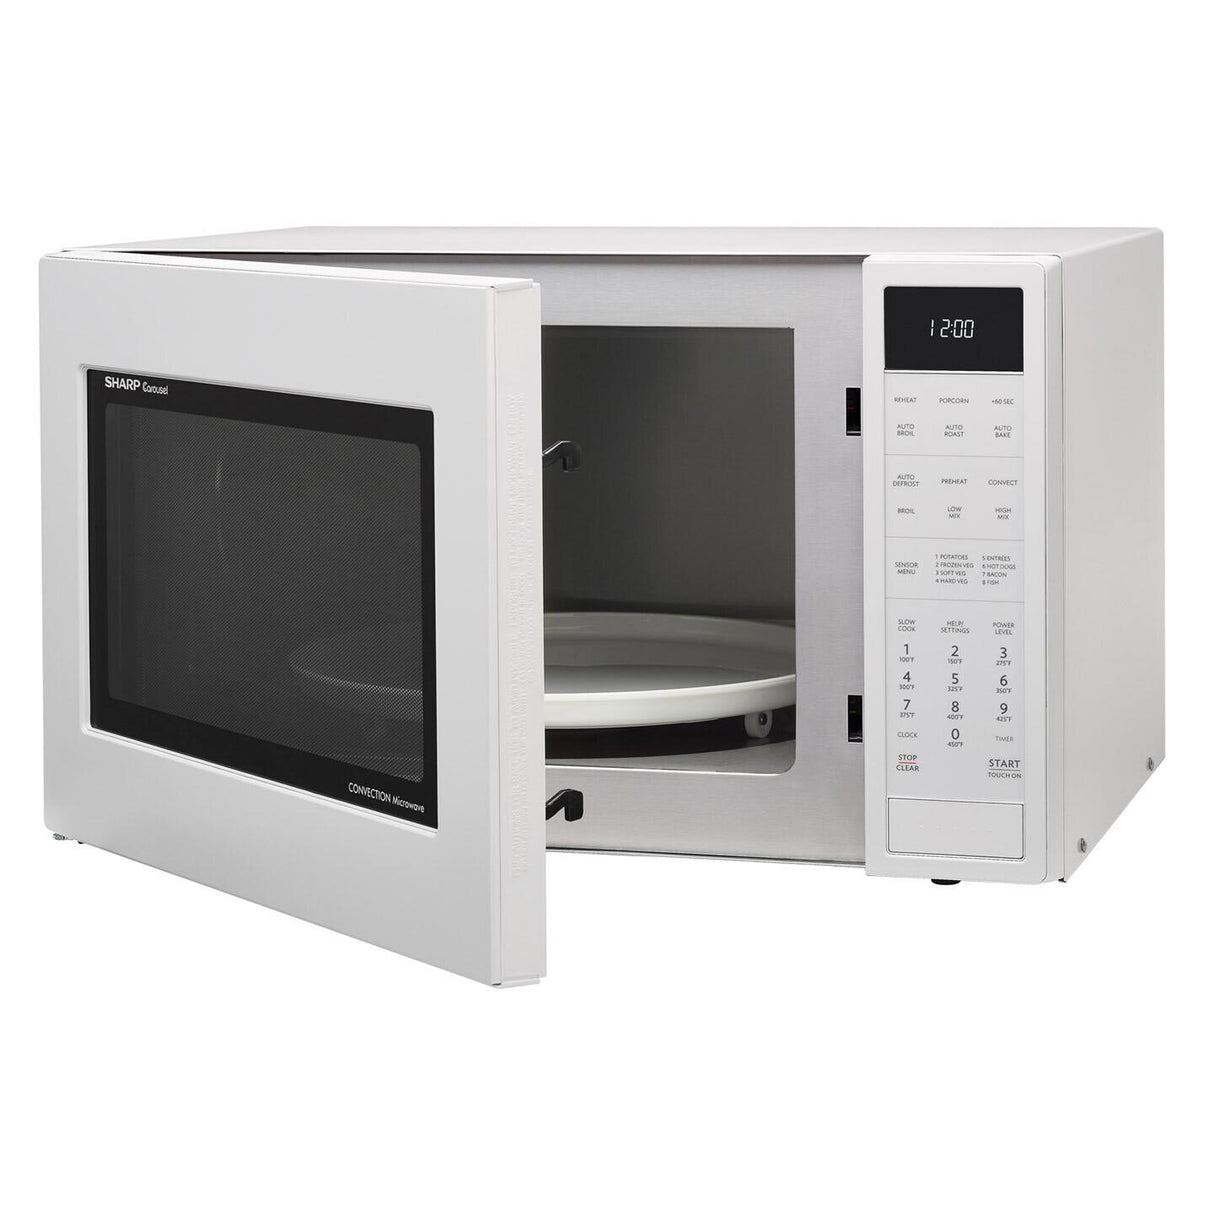 Sharp SMC1585BW 1.5 CF Carousel Countertop Microwave Oven, Convection